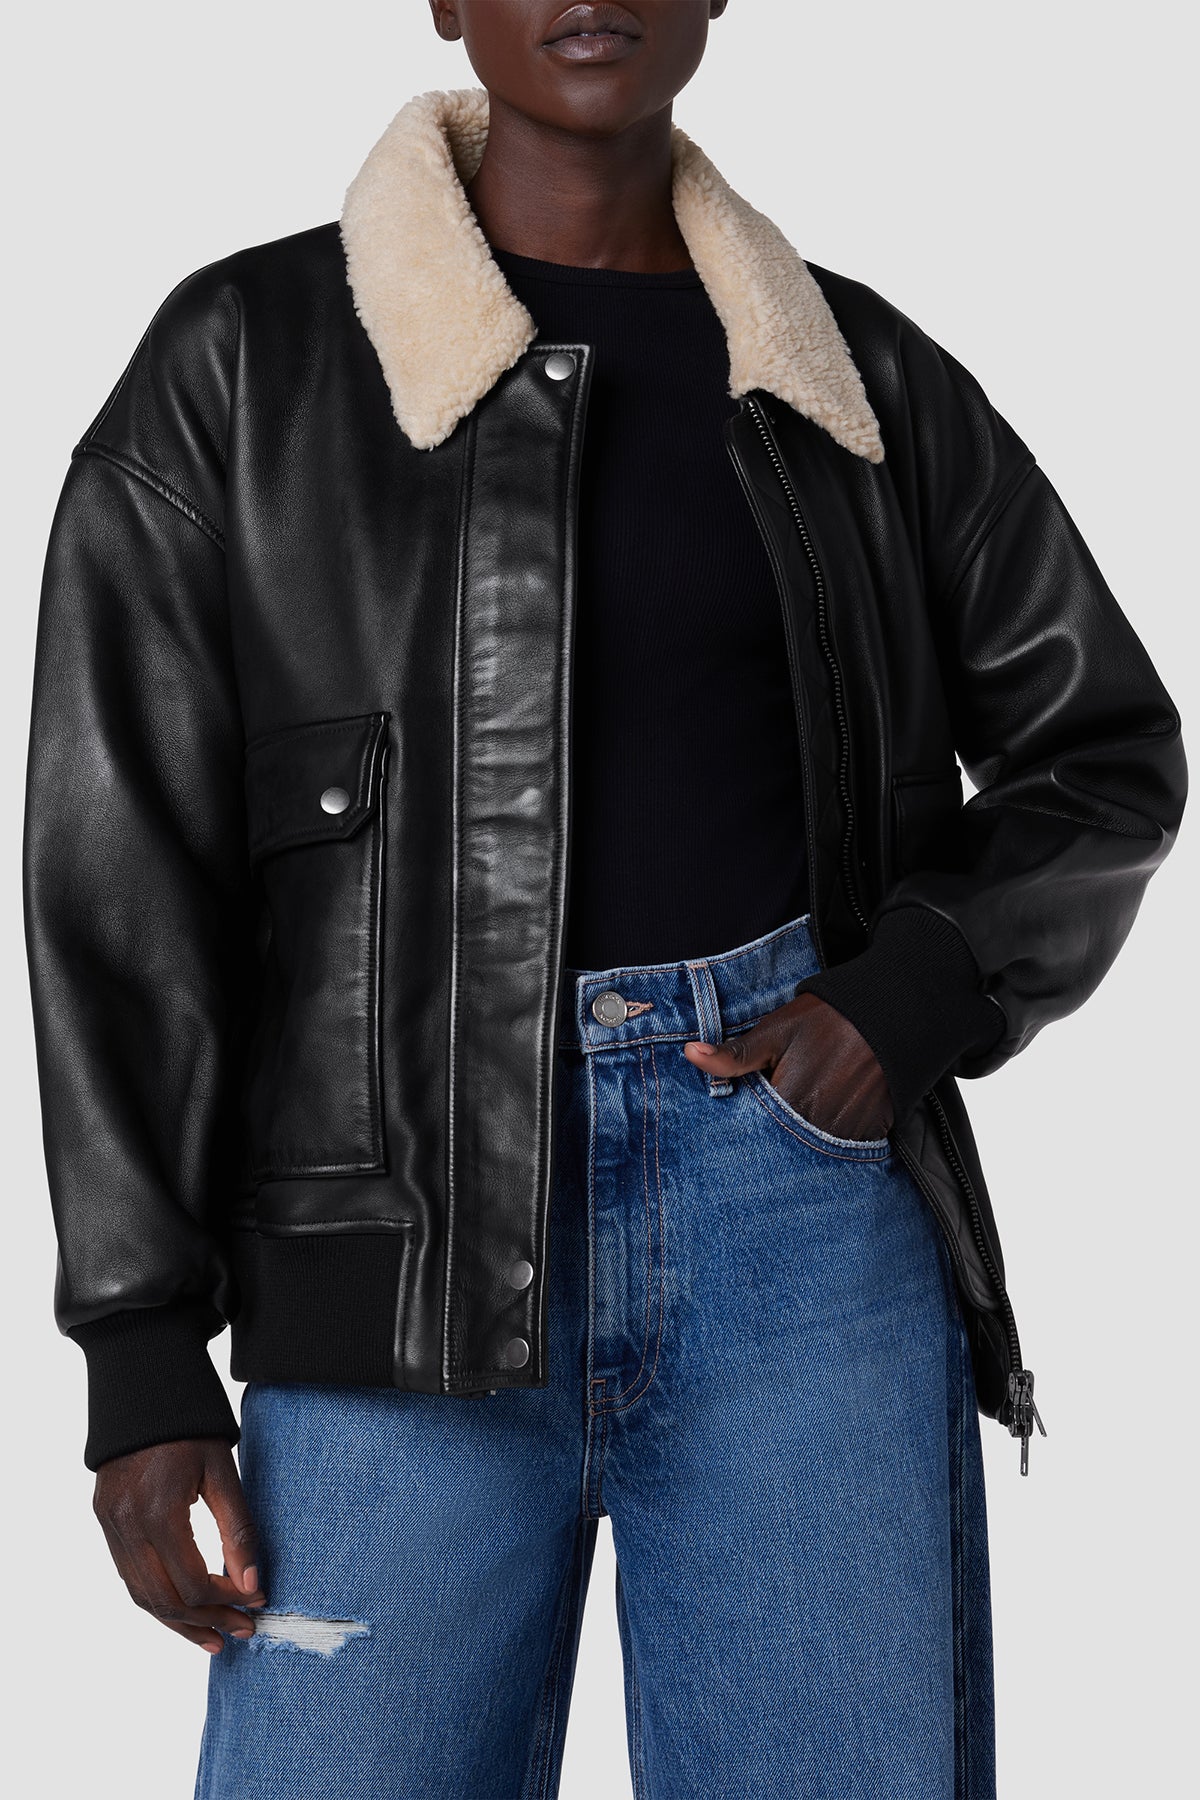 Hudson Jeans Leather Jacket - Black - XL